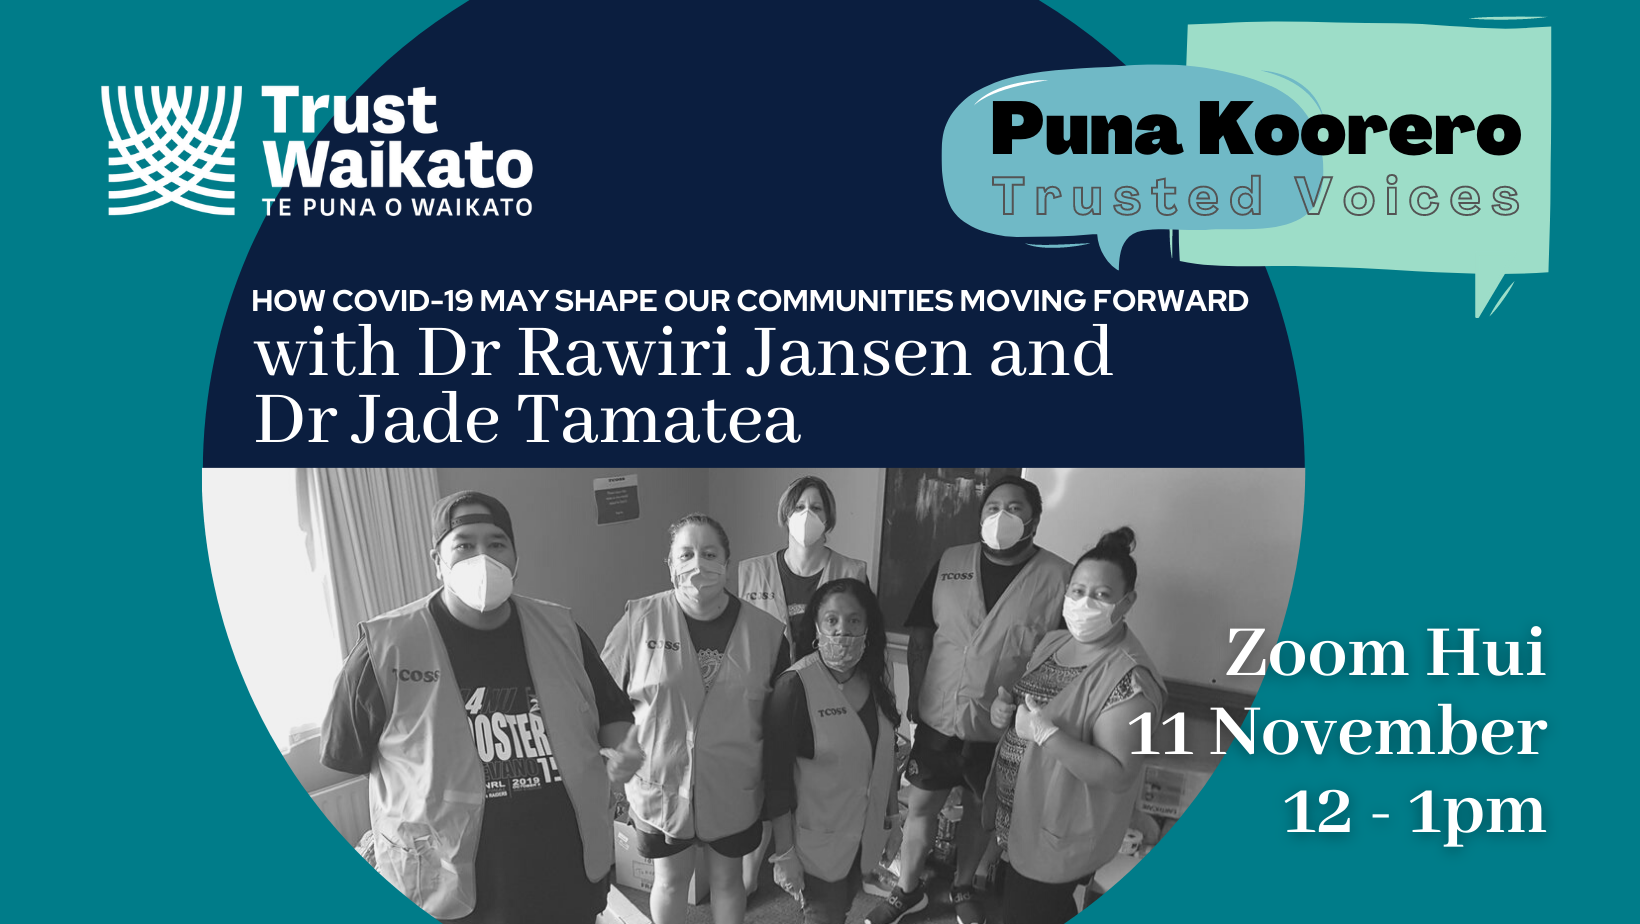 Puna Koorero - Communities with COVID-19 and the way forward with Dr Rawiri Jansen and Dr Jade Tamatea - Zoom Hui 11 November 12-1pm